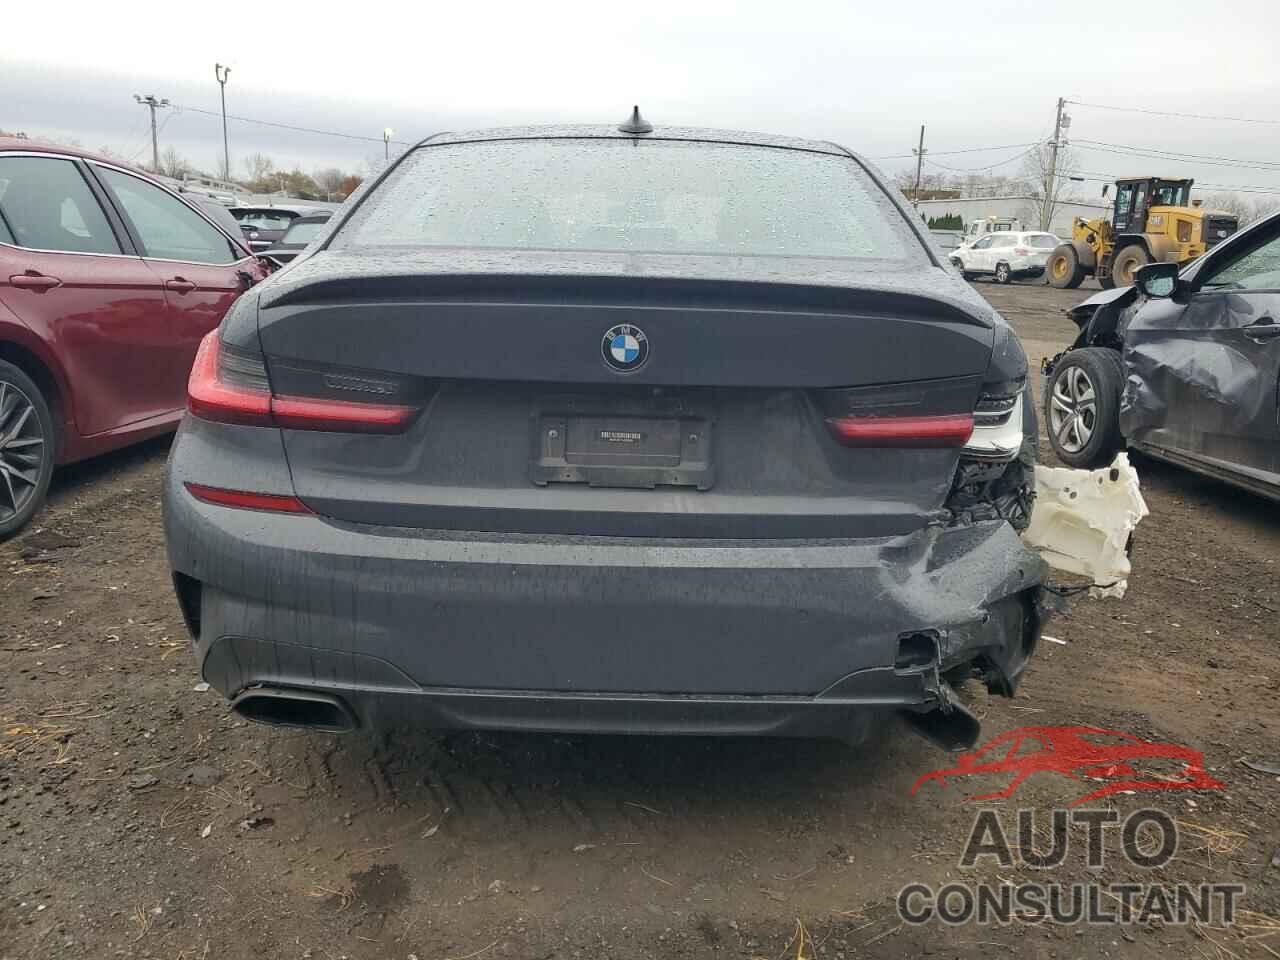 BMW M3 2020 - WBA5U9C01LA383520